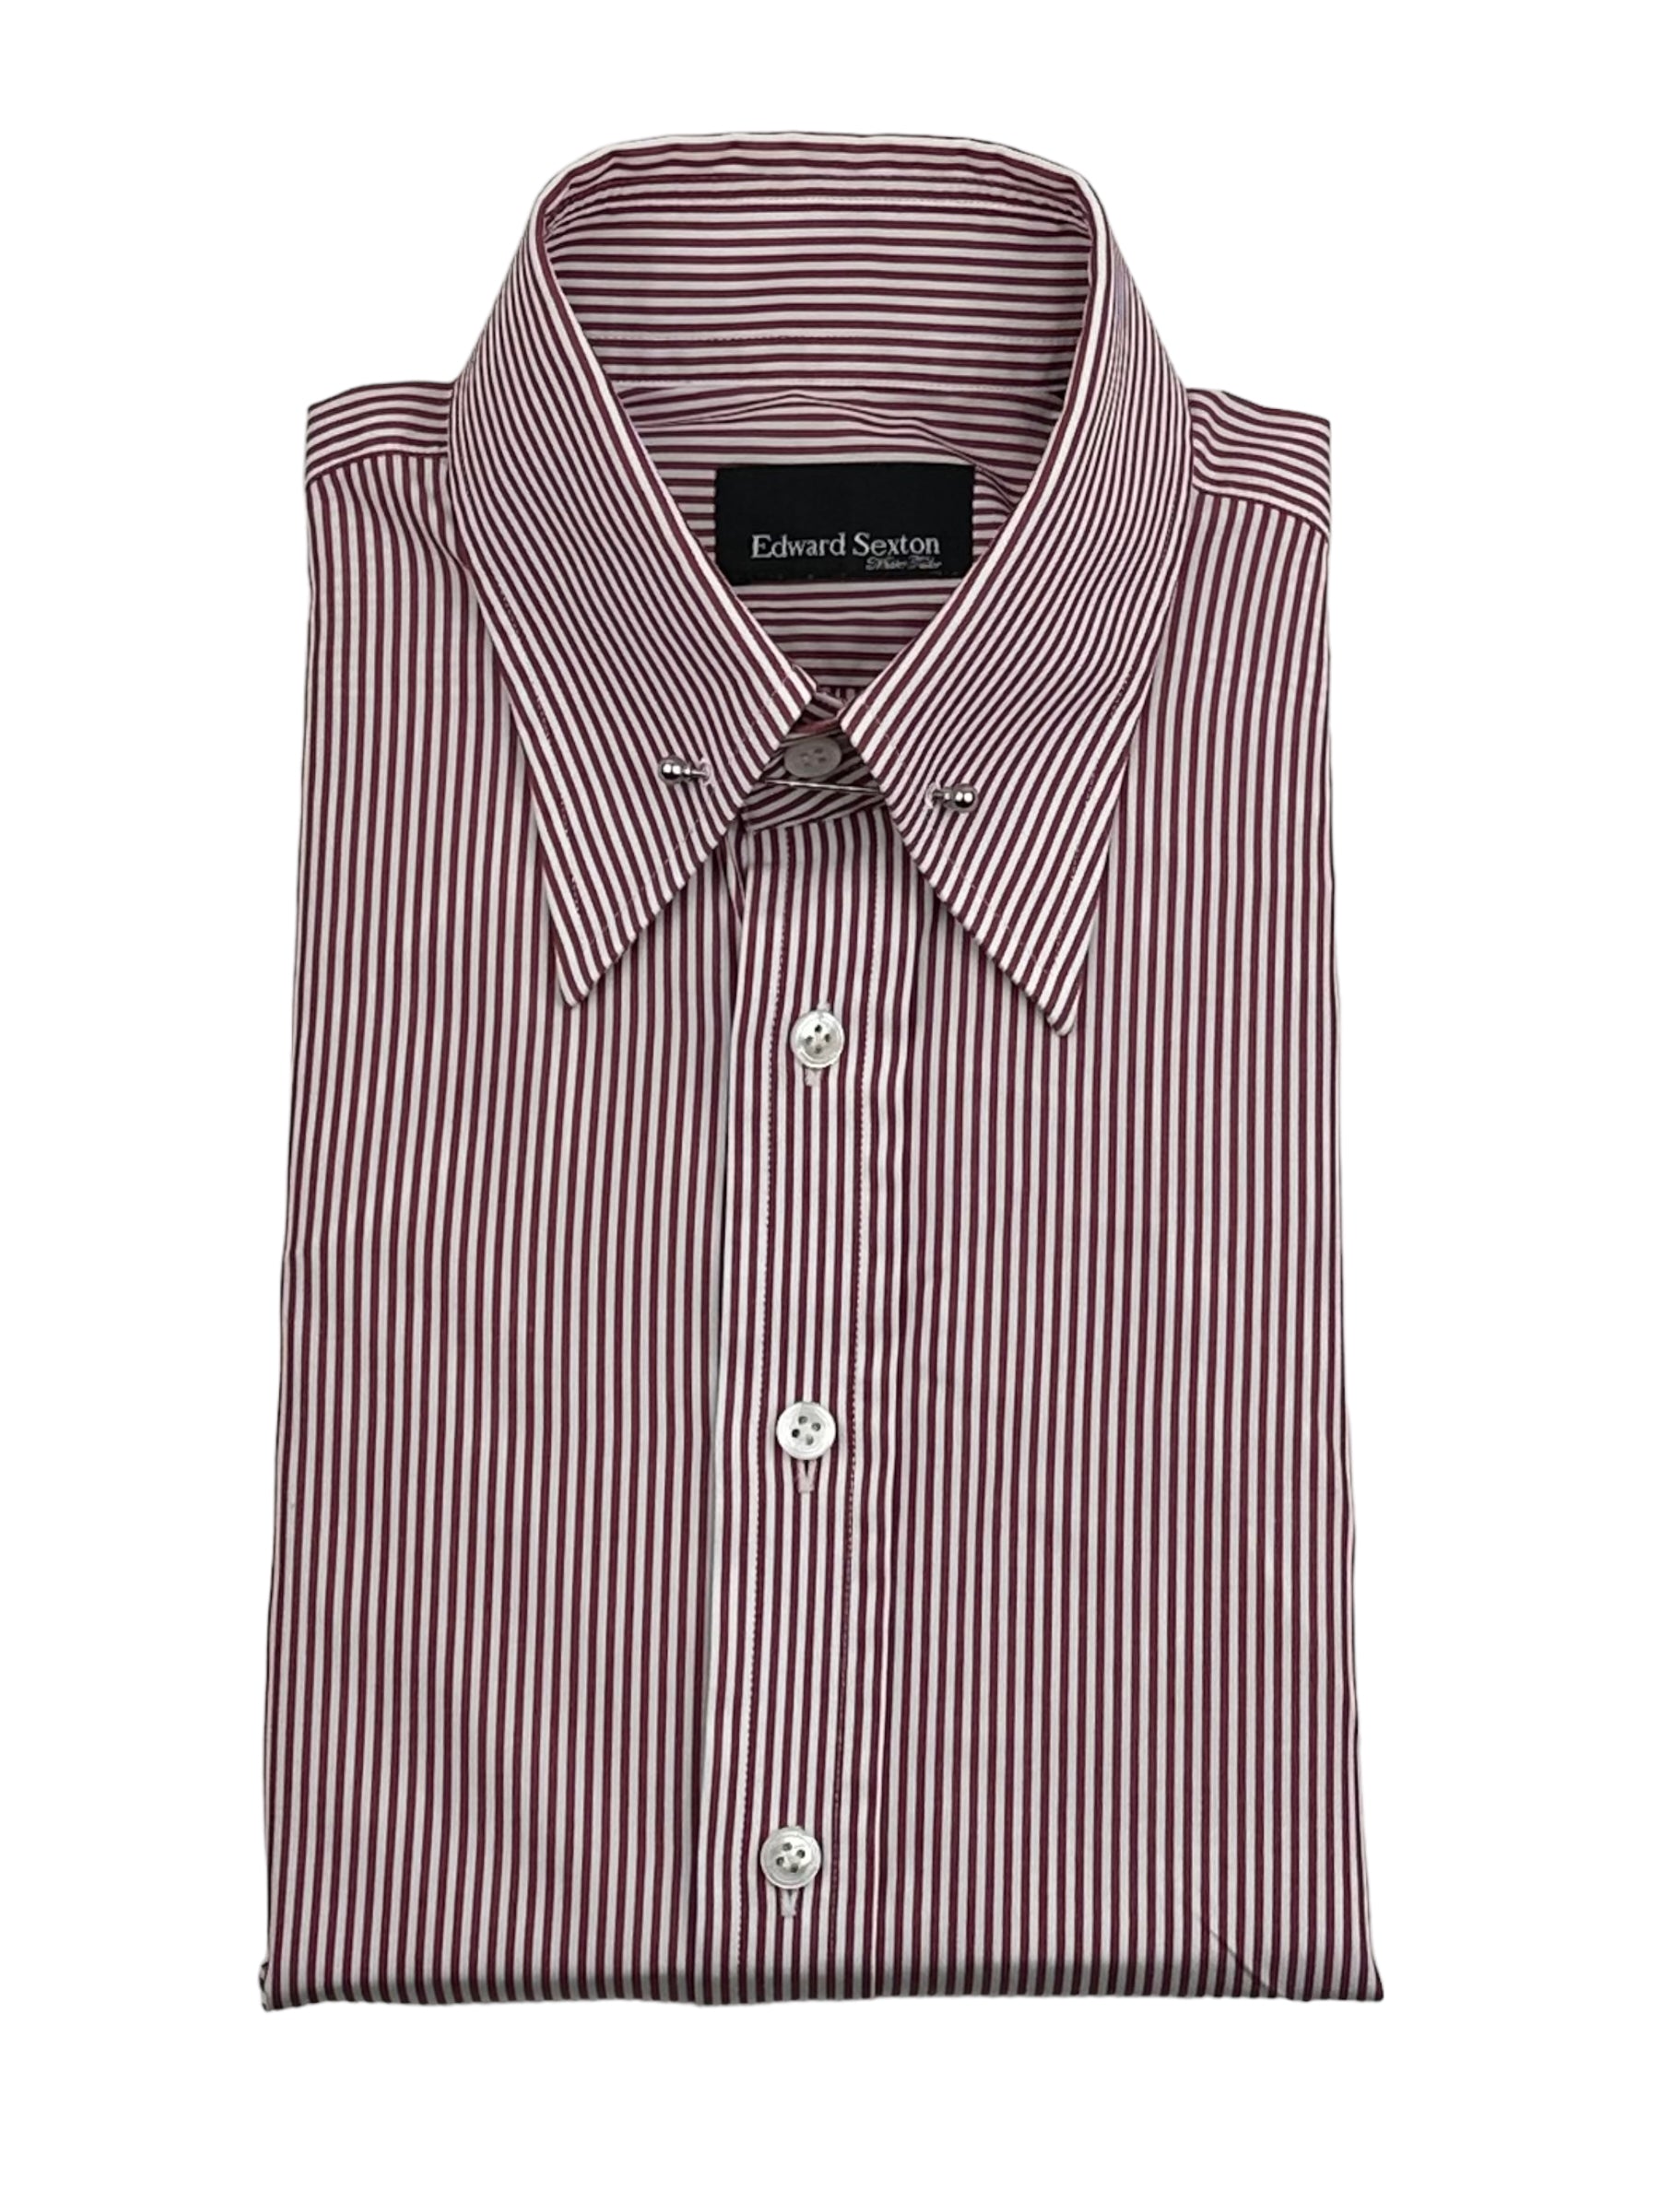 Edward Sexton Pin Collar Shirt